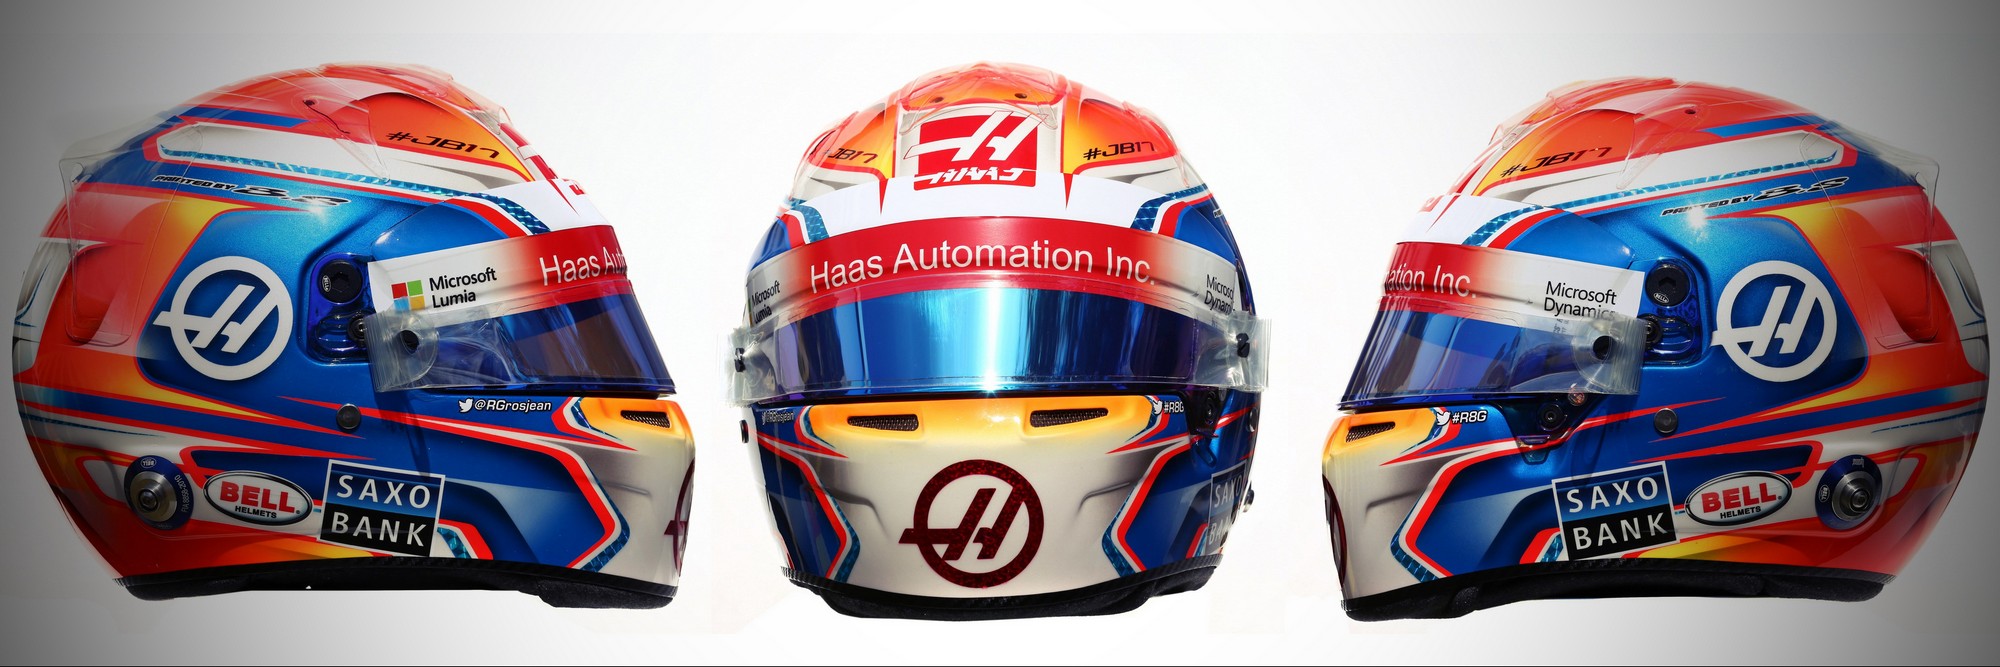 Шлем Романа Грожана на сезон 2016 года | 2016 helmet of Romain Grosjean